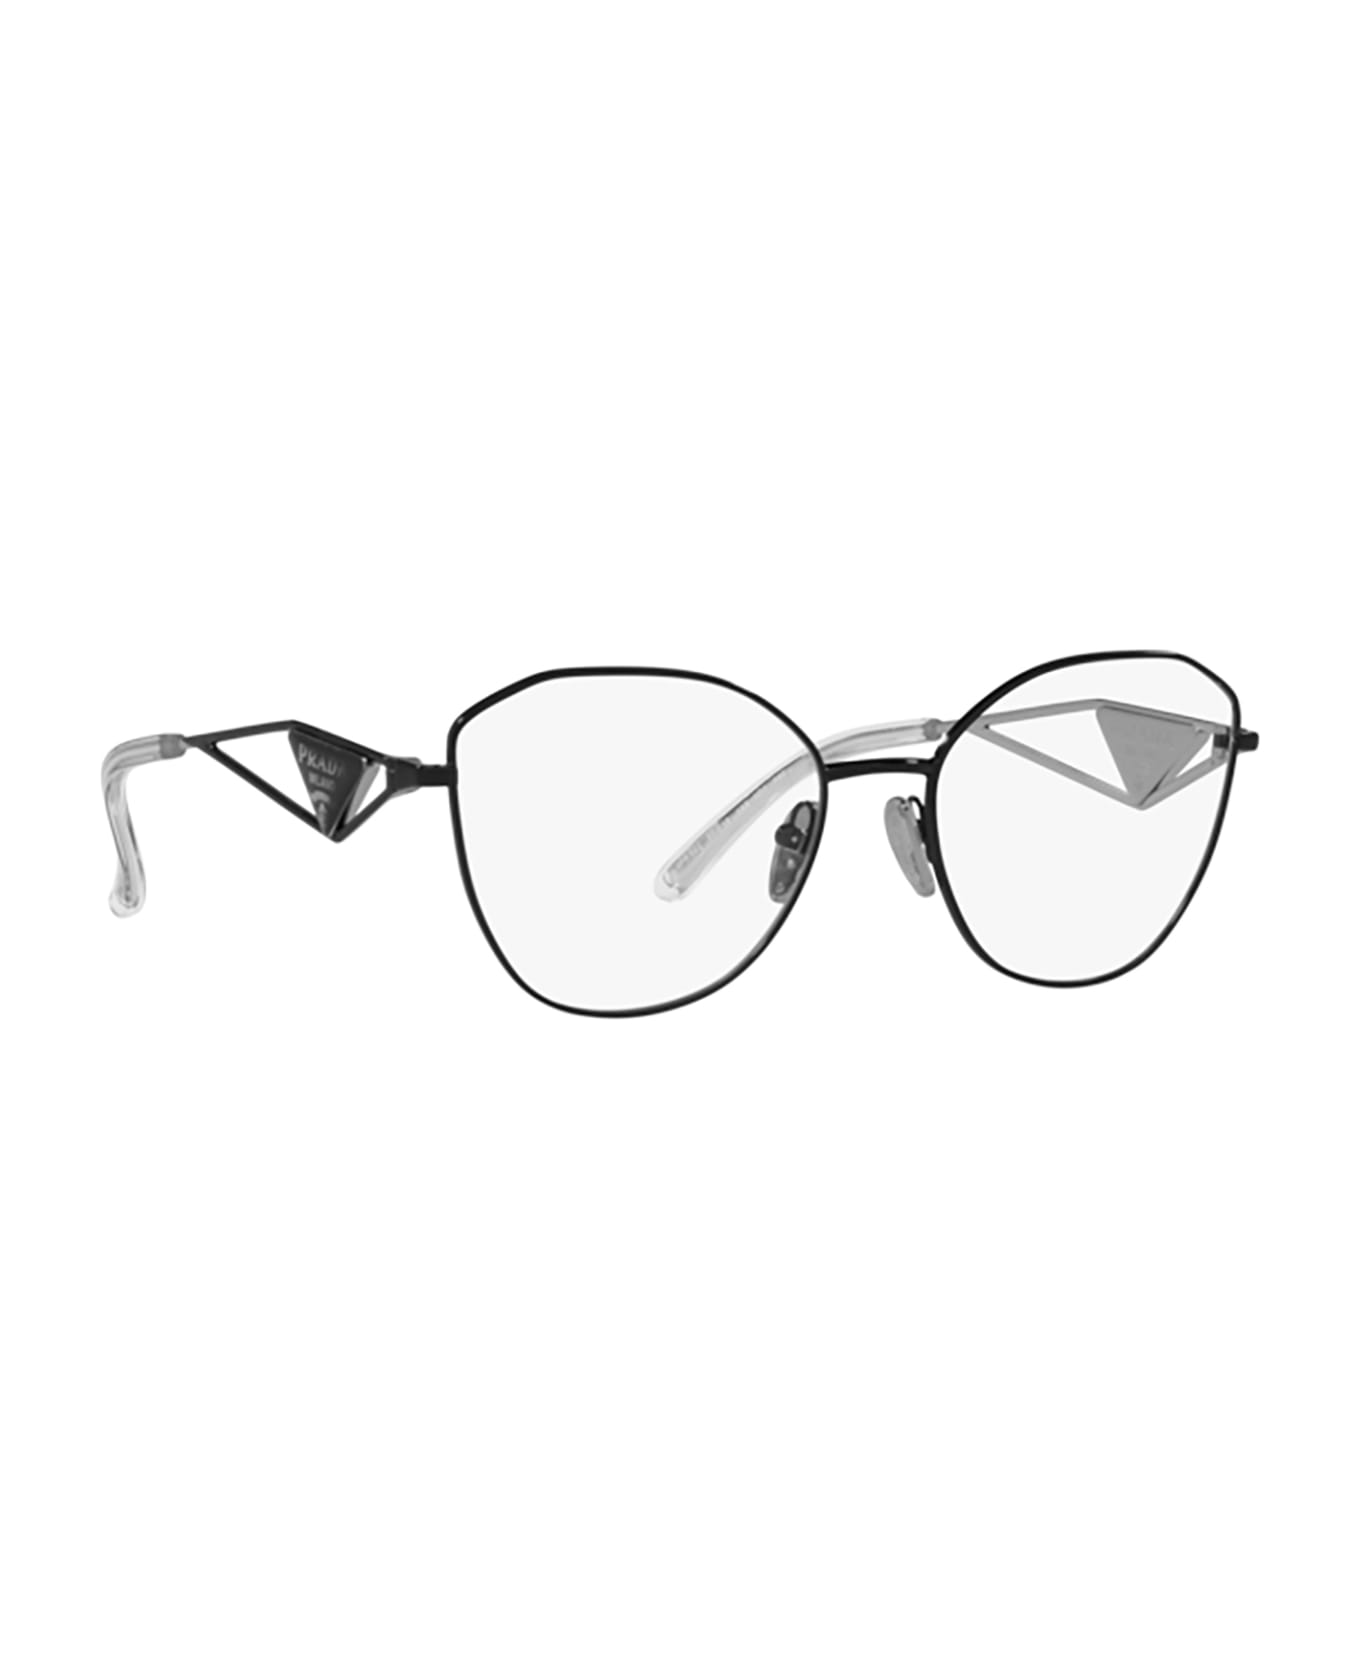 Prada Eyewear Pr 52zv Black Glasses - Black